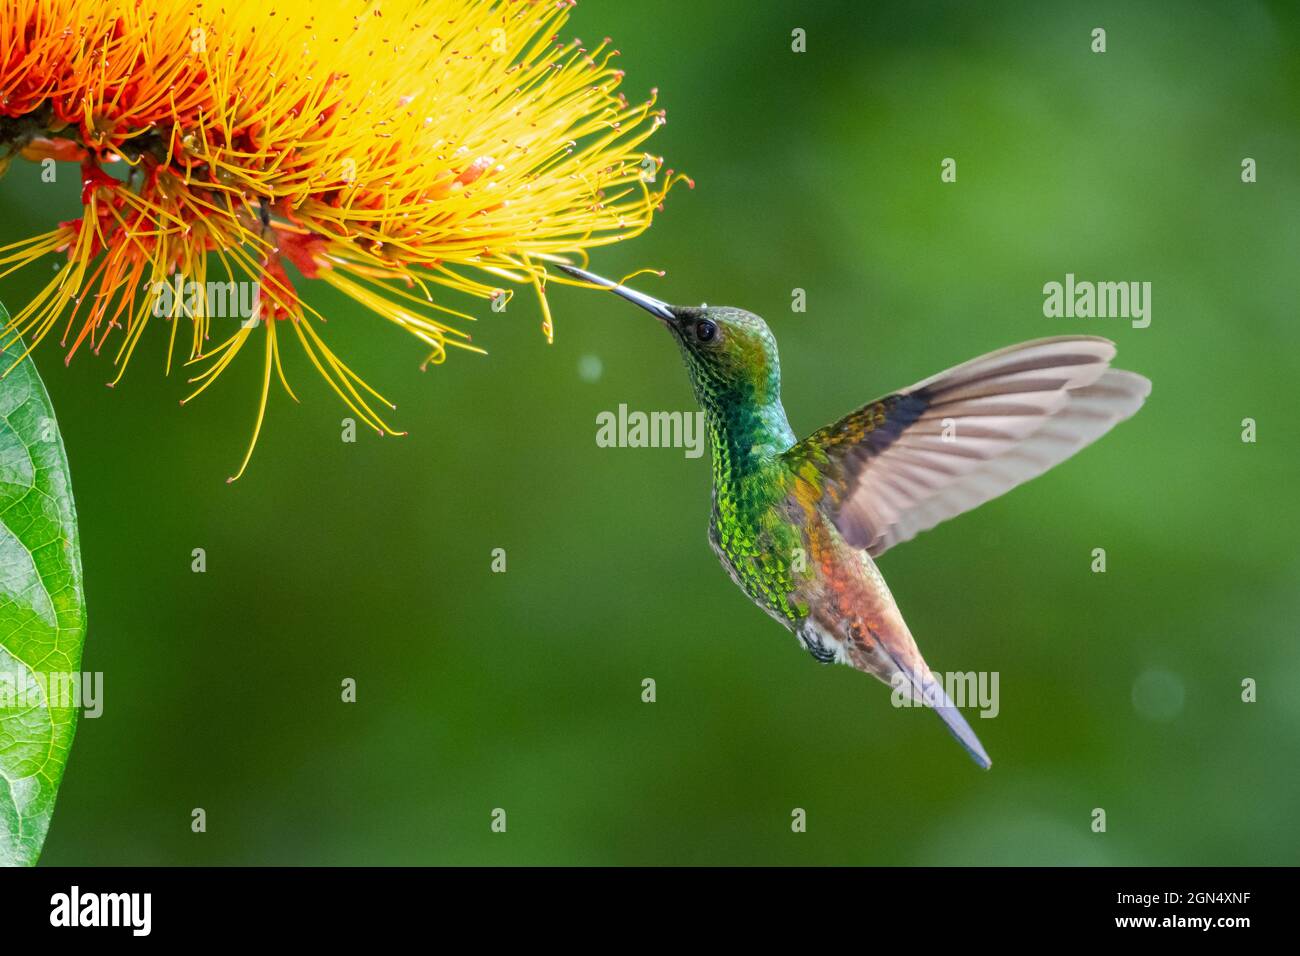 A Copper-rumped hummingbird (Amazilia tobaci) feeding on the Combretum flower in the rain with a bokeh background Stock Photo